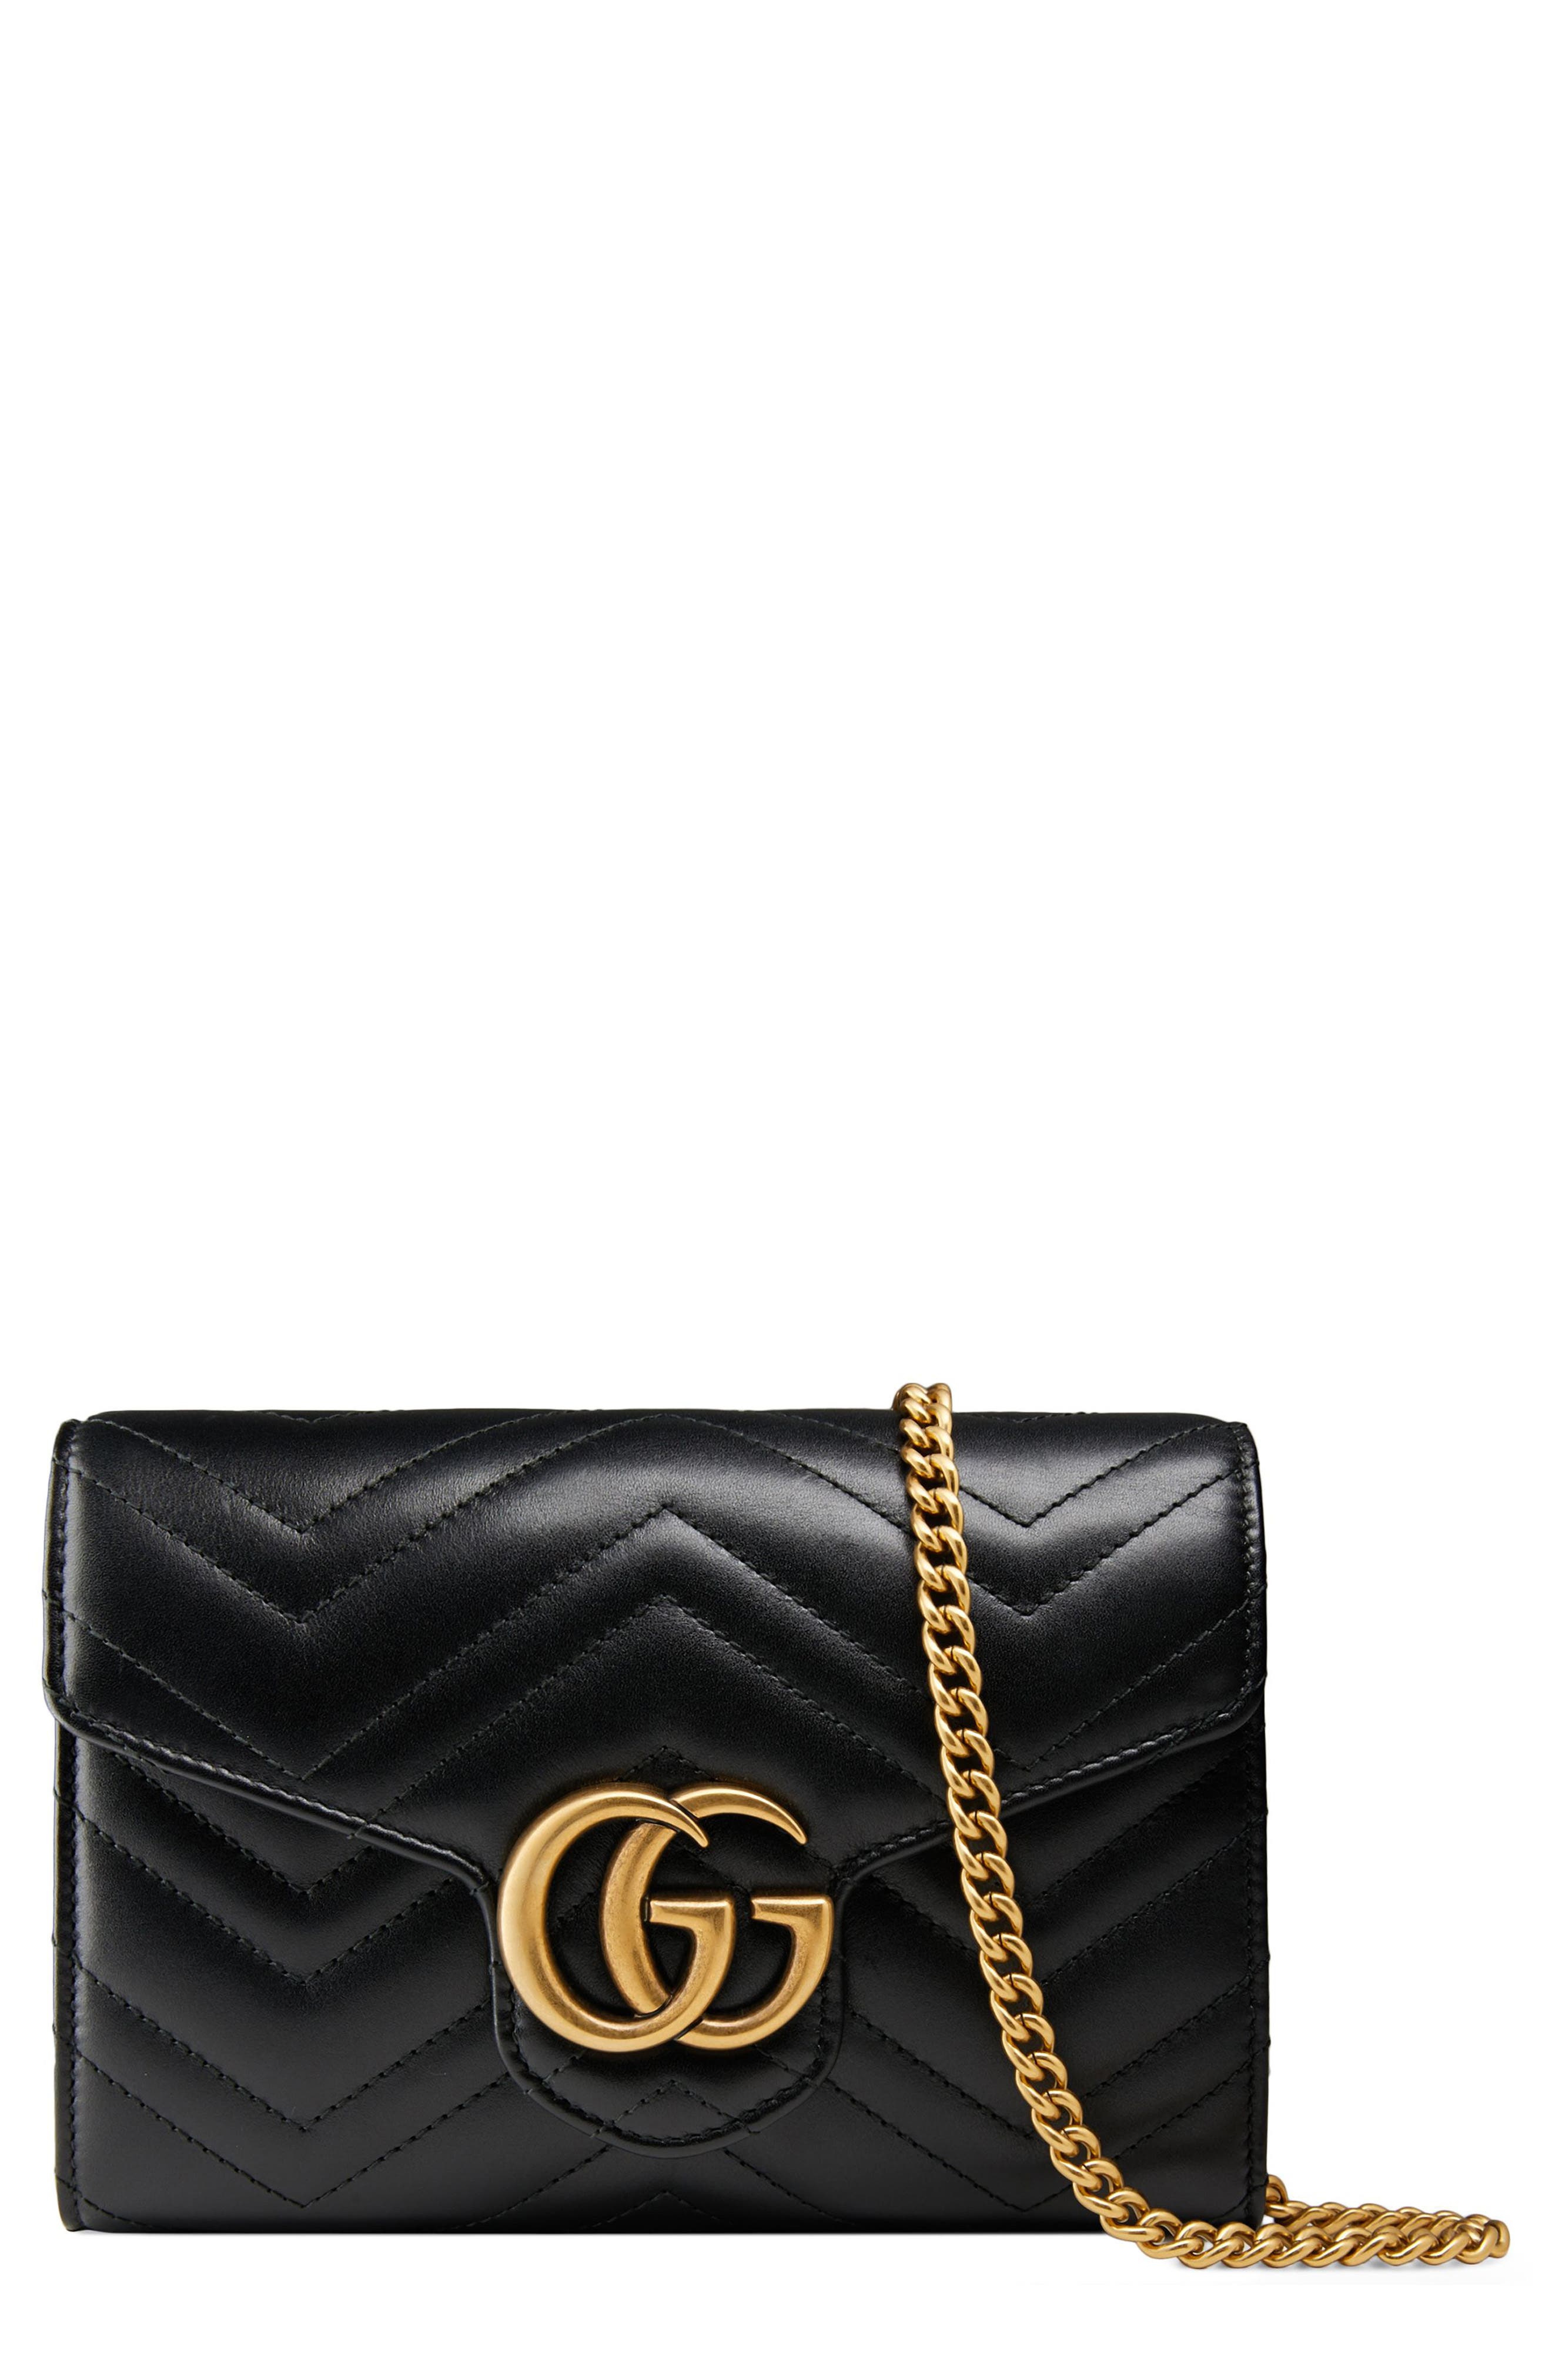 Gucci GG Matelassé Leather Wallet on a 